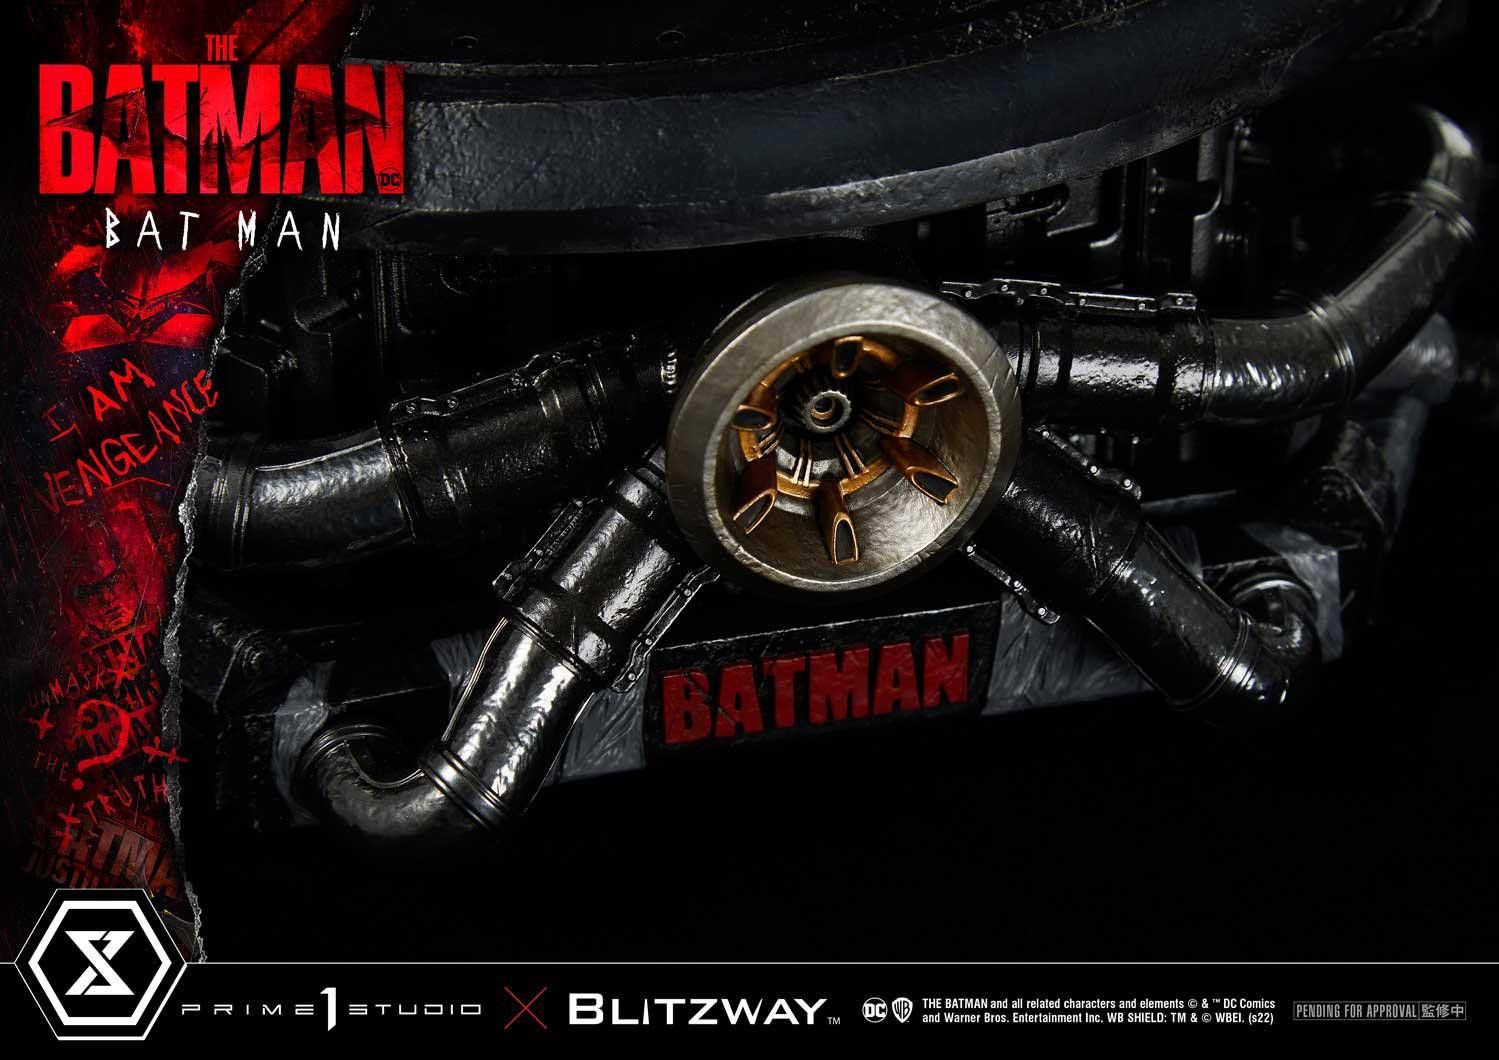 Роберт Паттинсон в образе Бэтмена &mdash; фигурка за $1 599. Источник: prime1studio.com